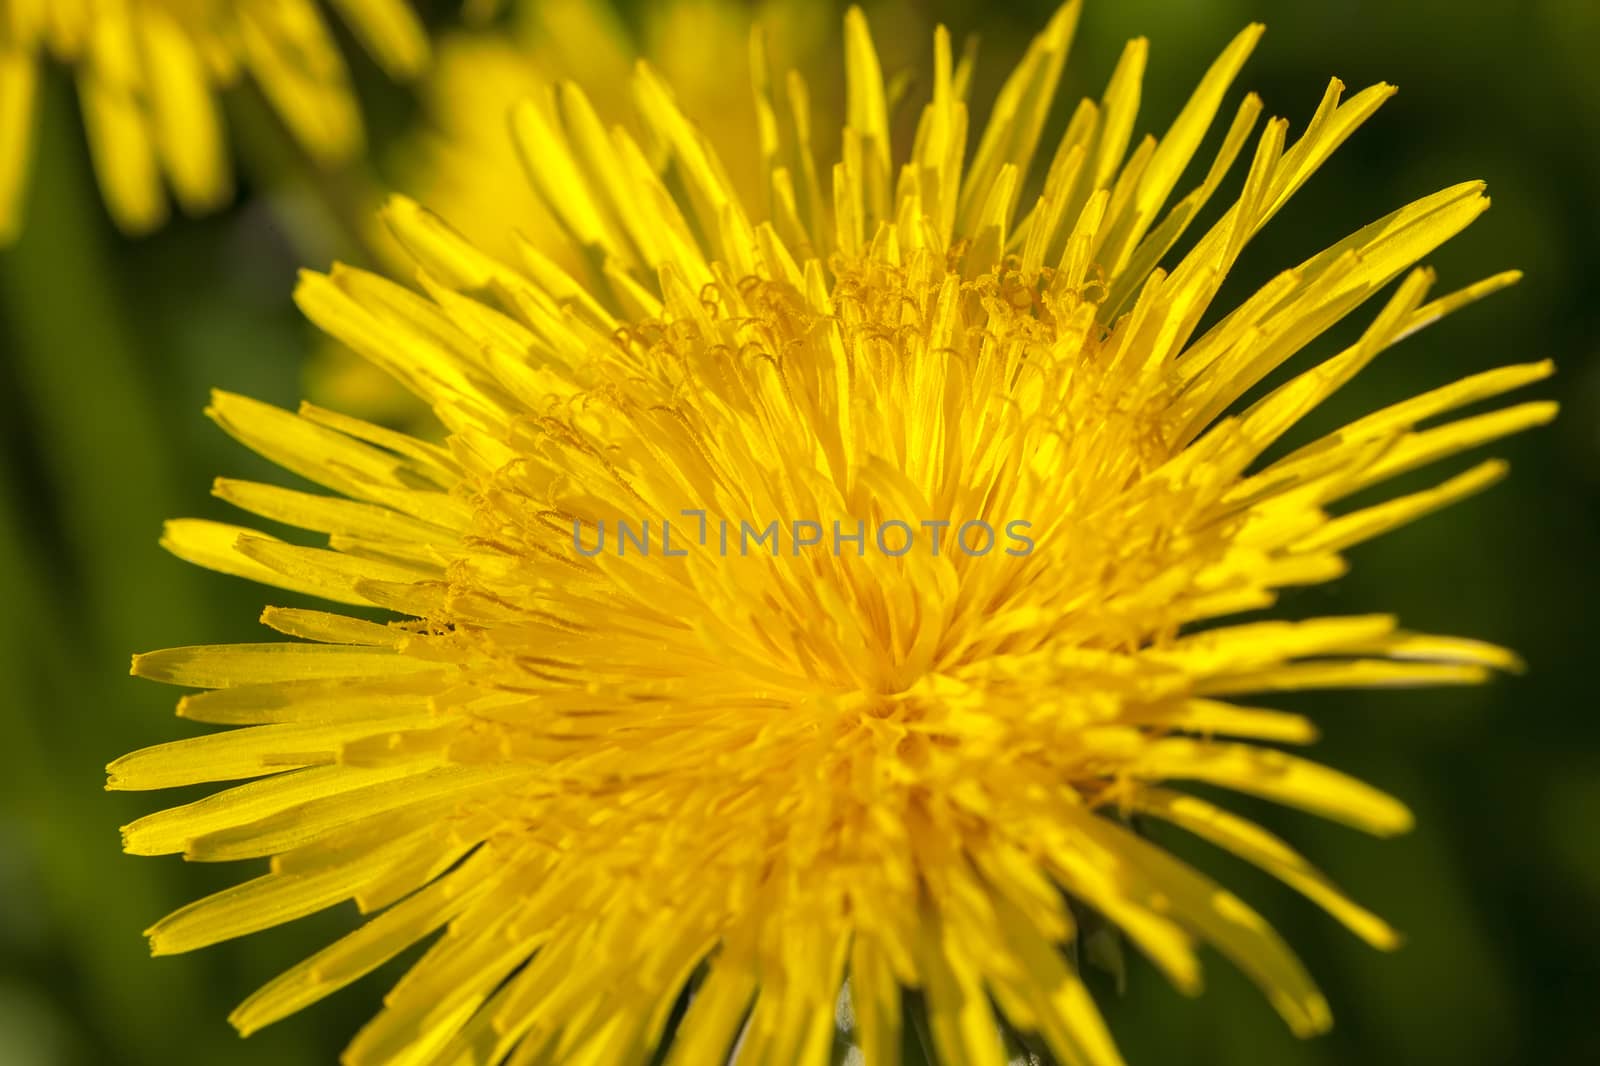 yellow dandelions in spring by avq